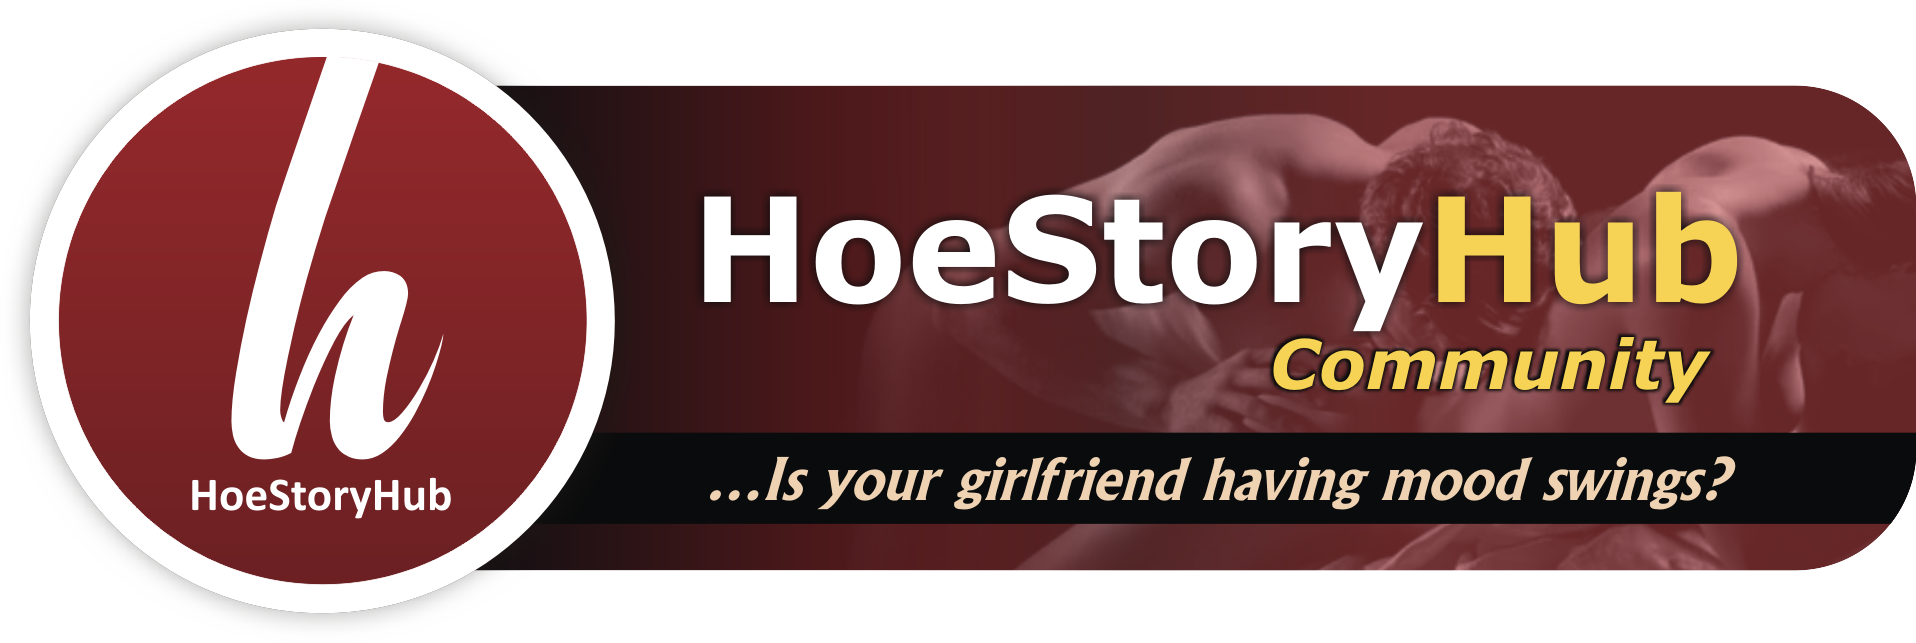 HoeStoryHub - Hookup Site for Escorts